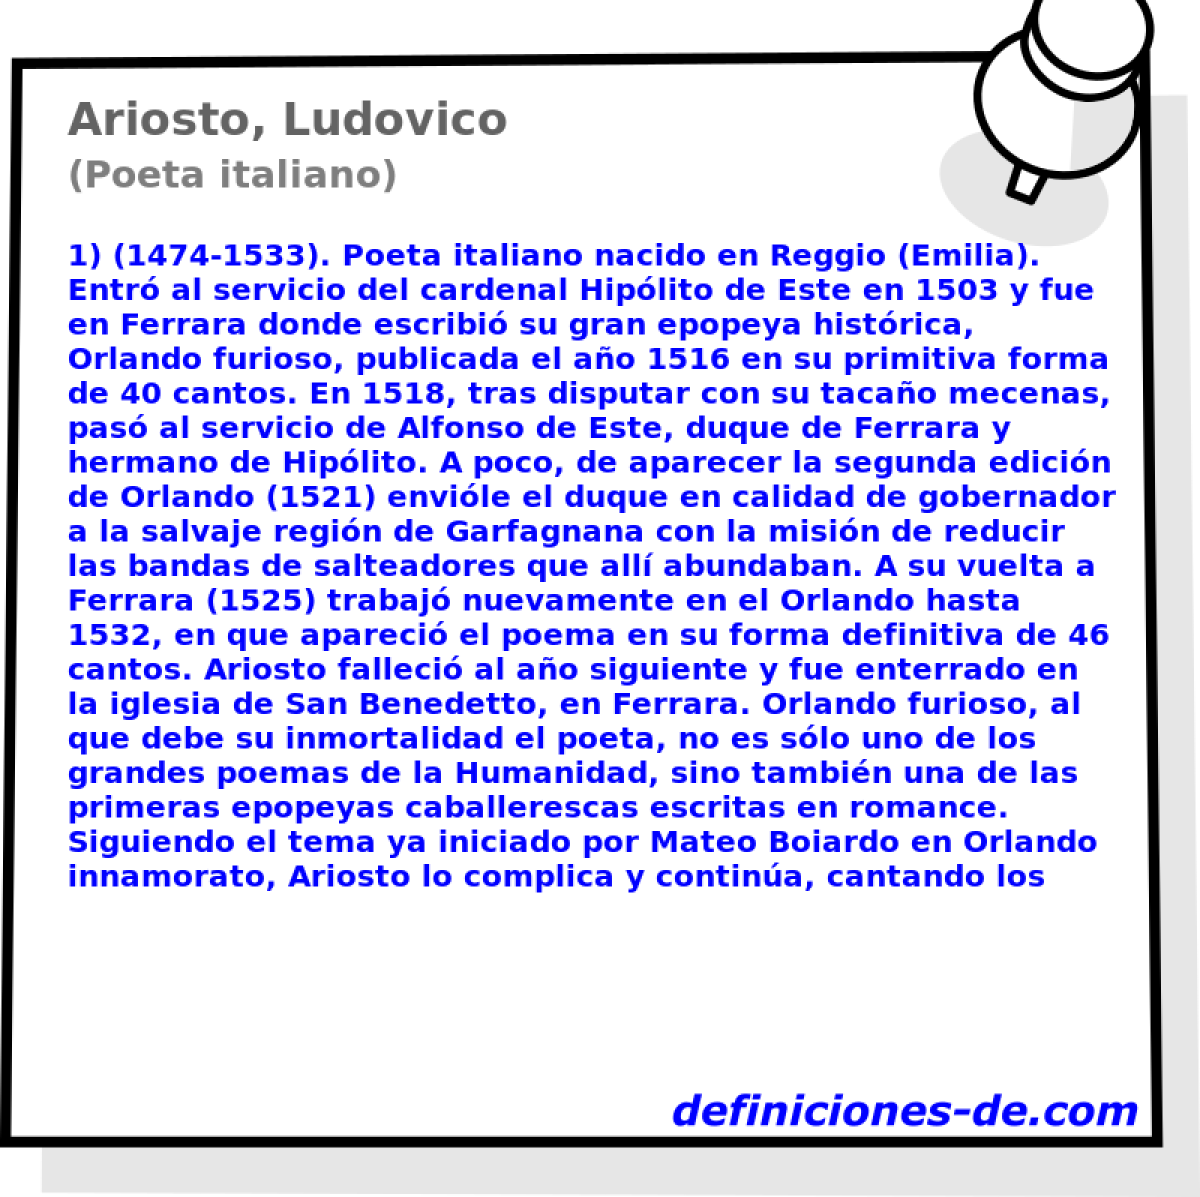 Ariosto, Ludovico (Poeta italiano)